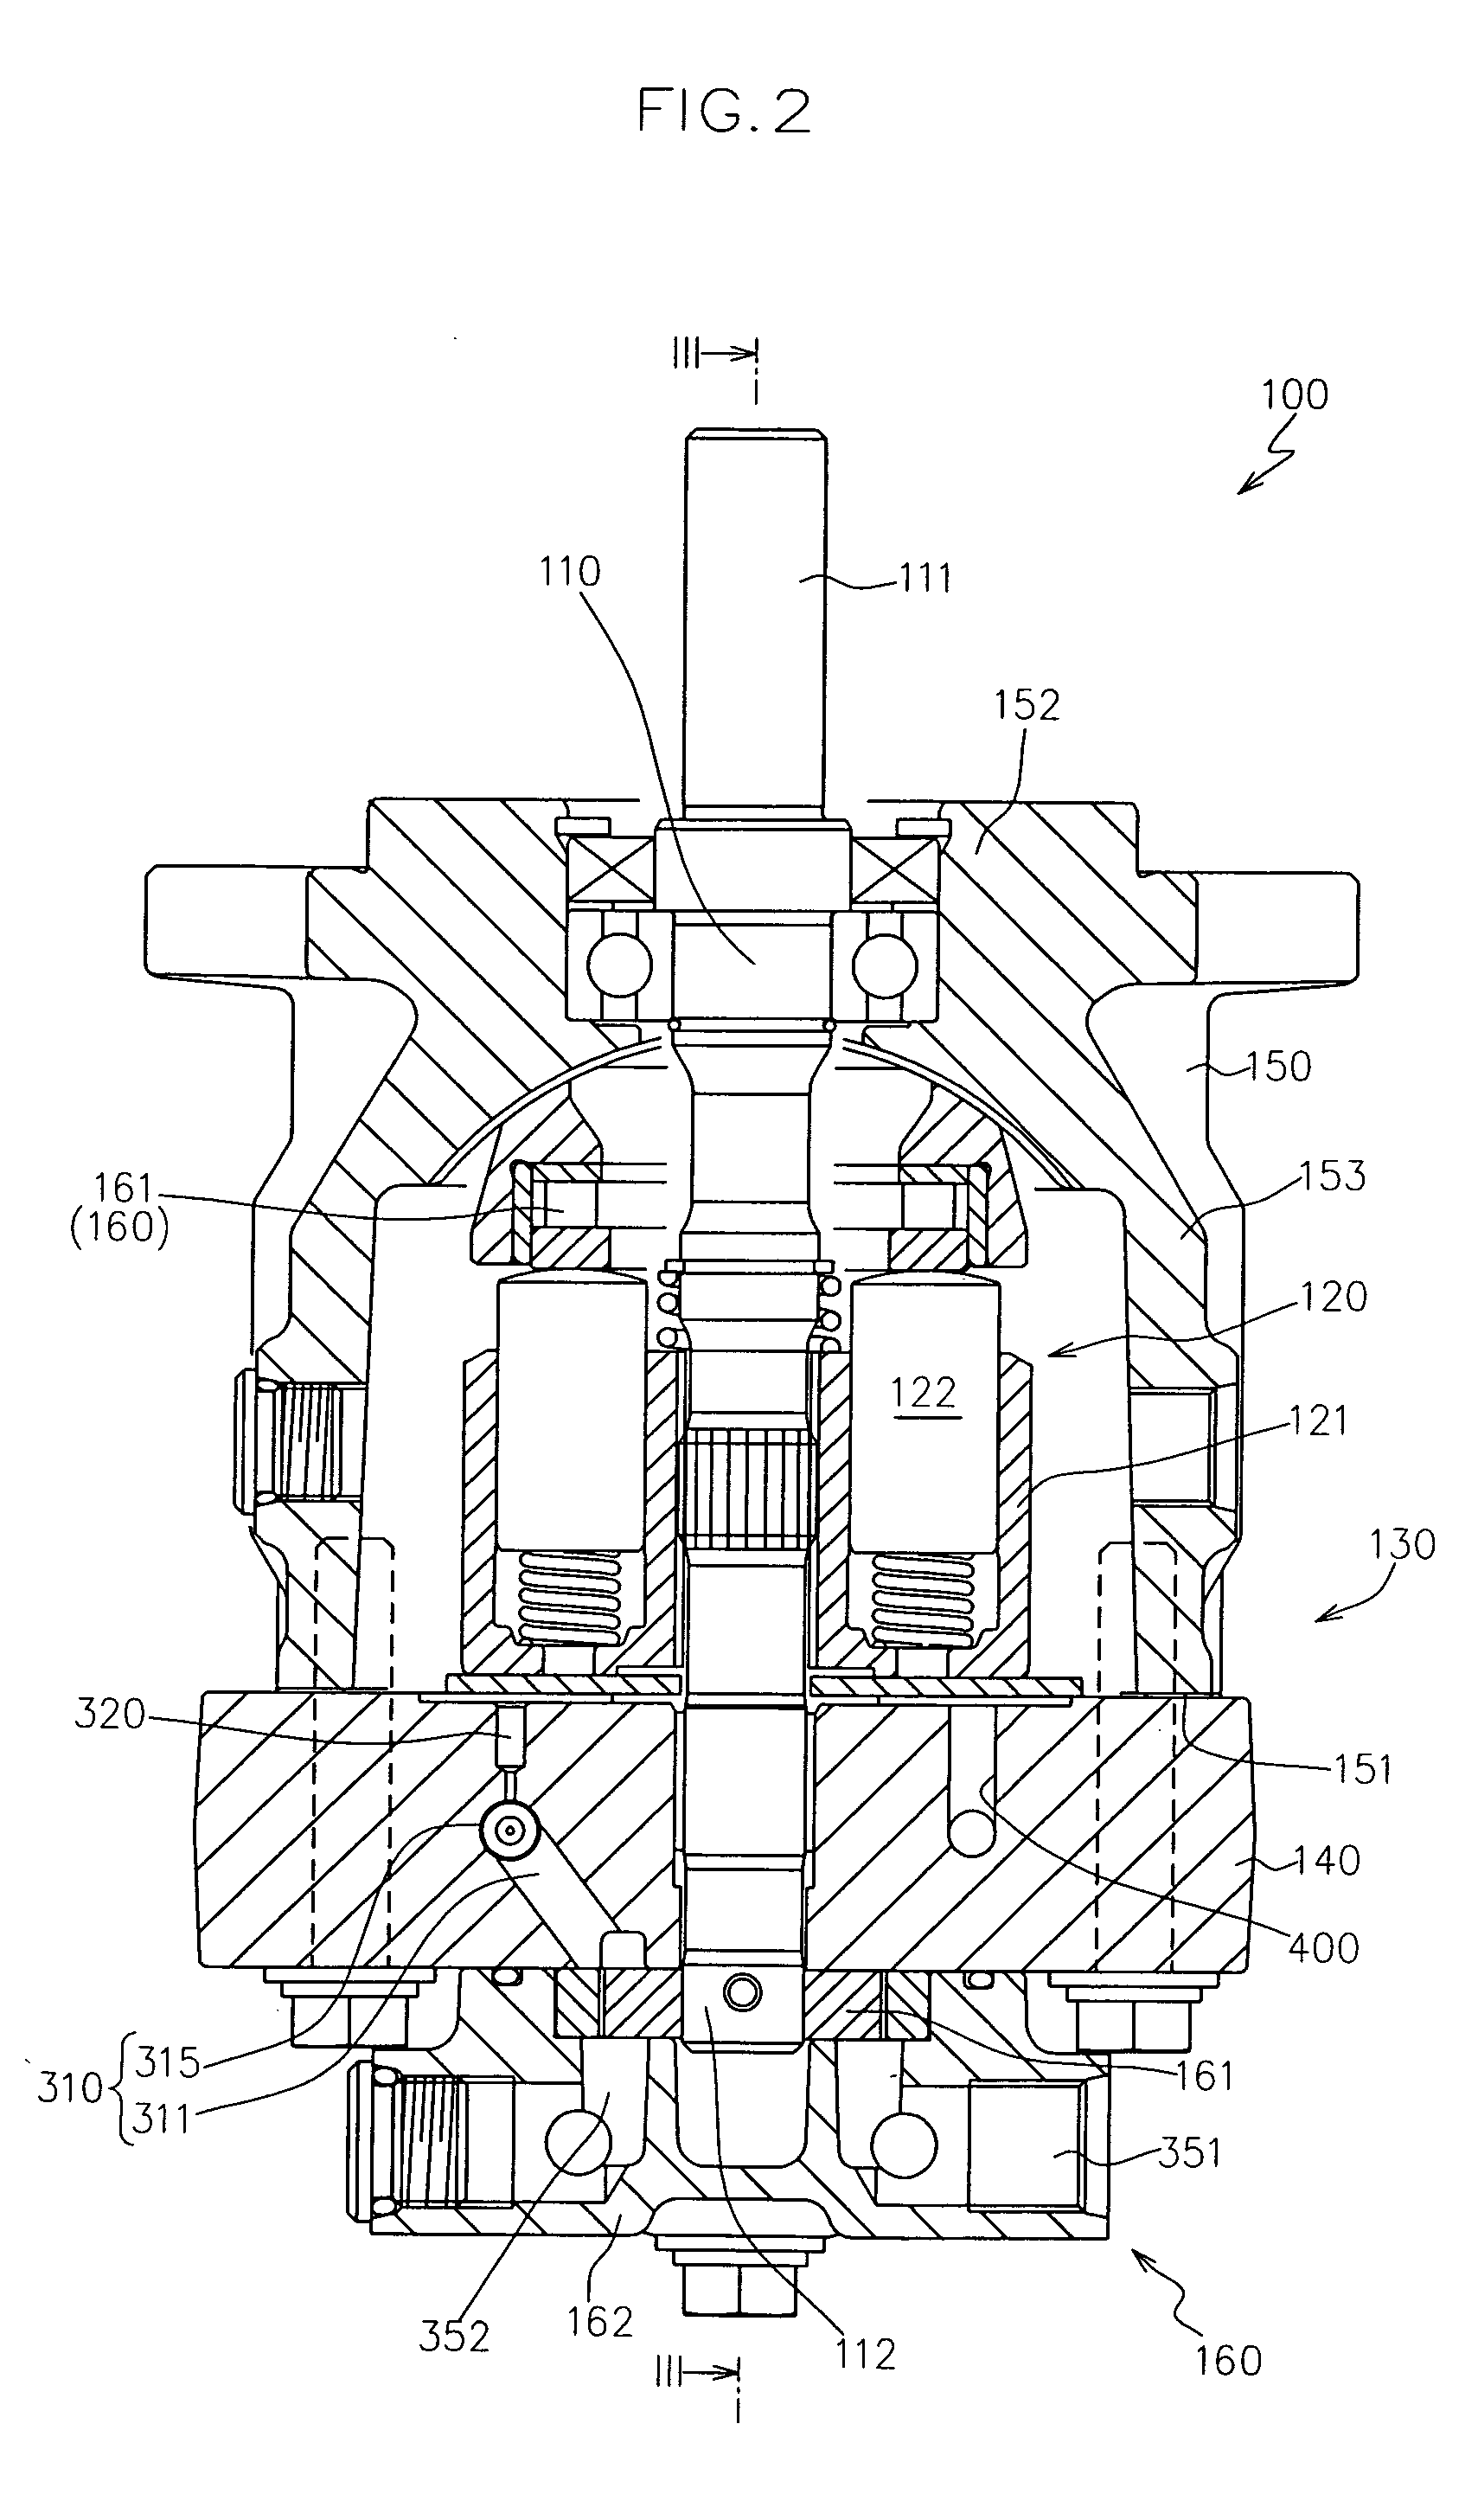 Neutral valve structure